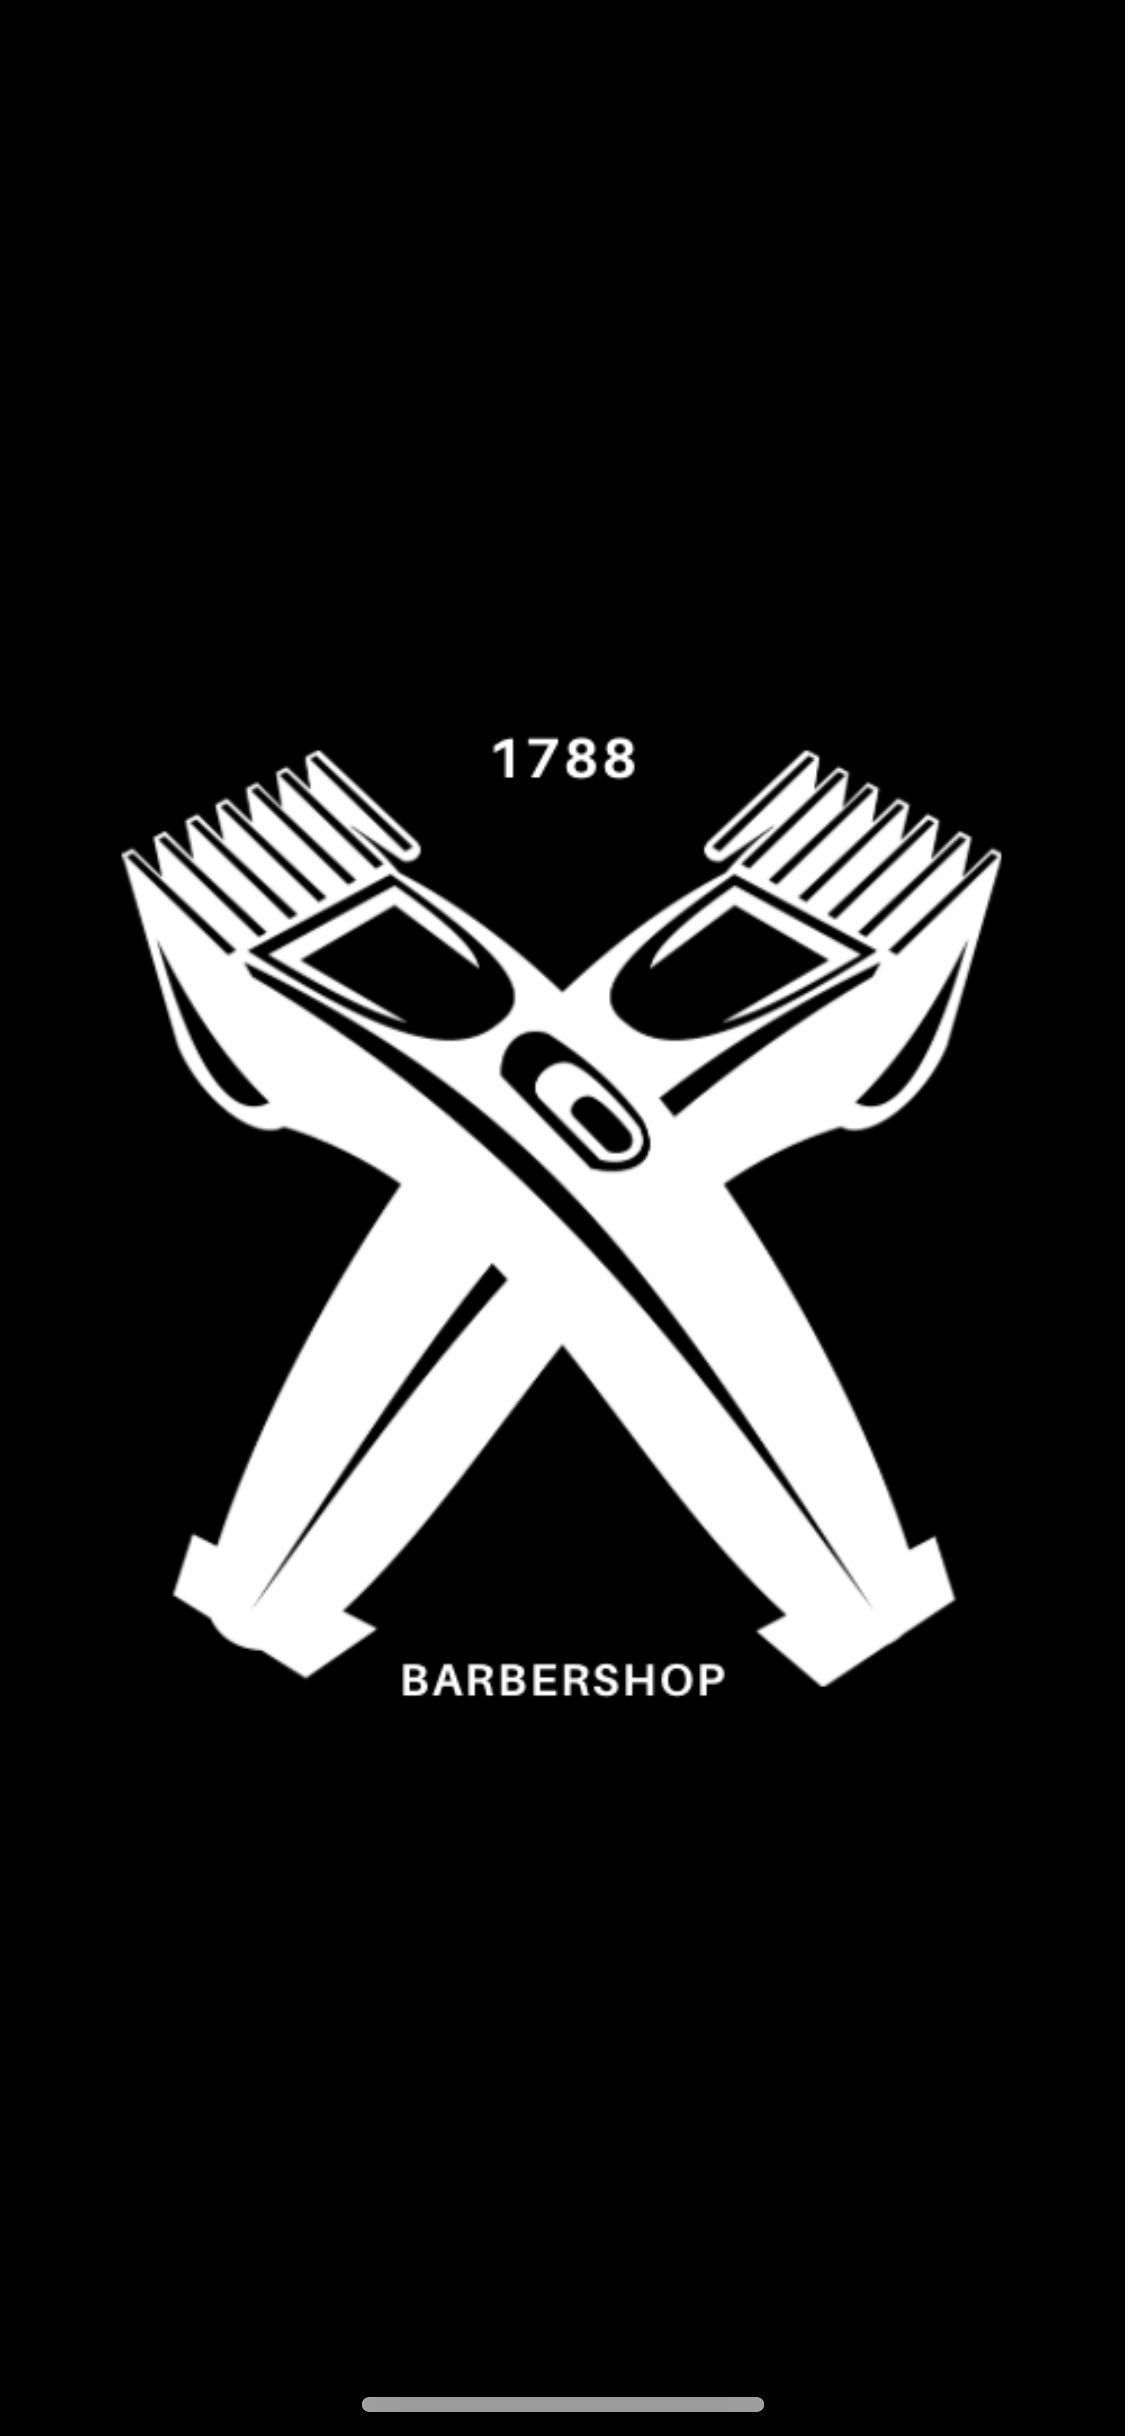 1788 Barbershop, 15 route 236, Halfmoon, 12065